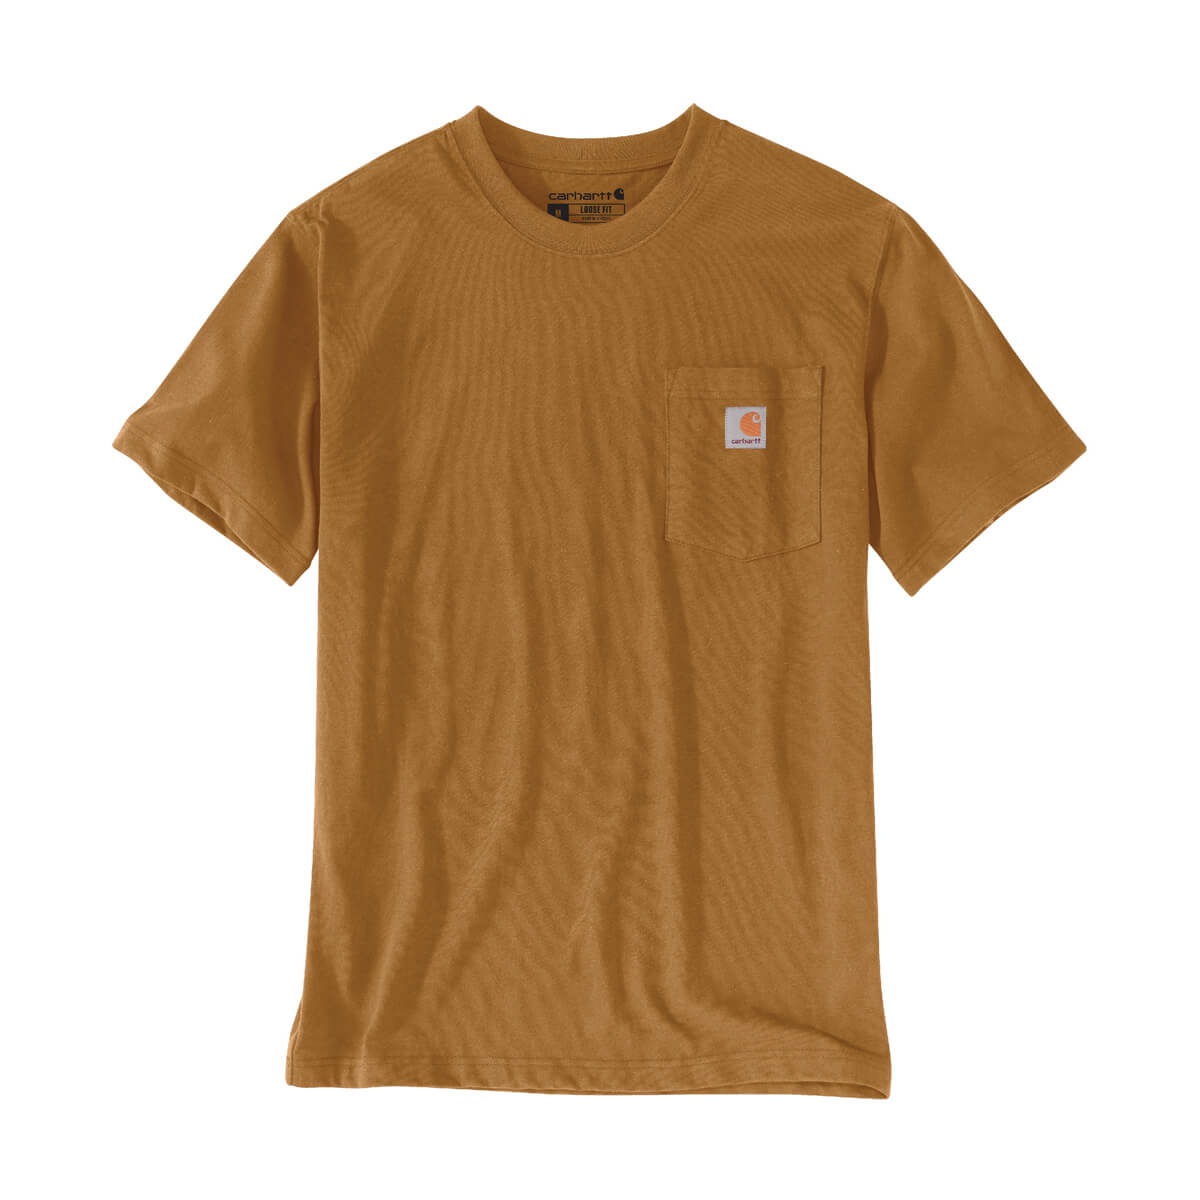 Carhartt Men's Relaxed Fit Heavyweight Short-Sleeve Pocket C Graphic T-Shirt - Brown